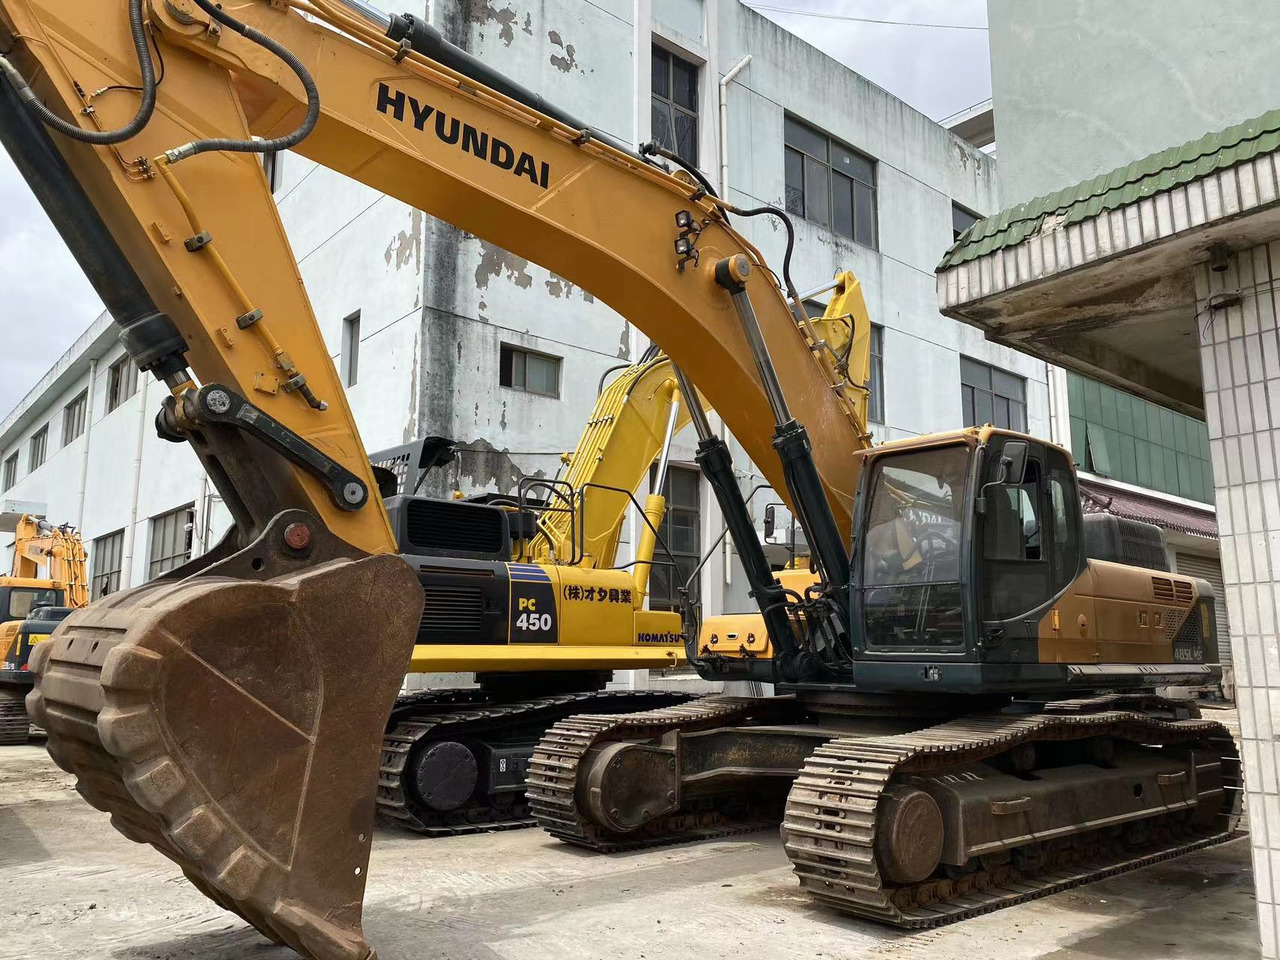 Beltegraver Korea made HYUNDAI used excavator good condition R485LVS best service on sale: bilde 2